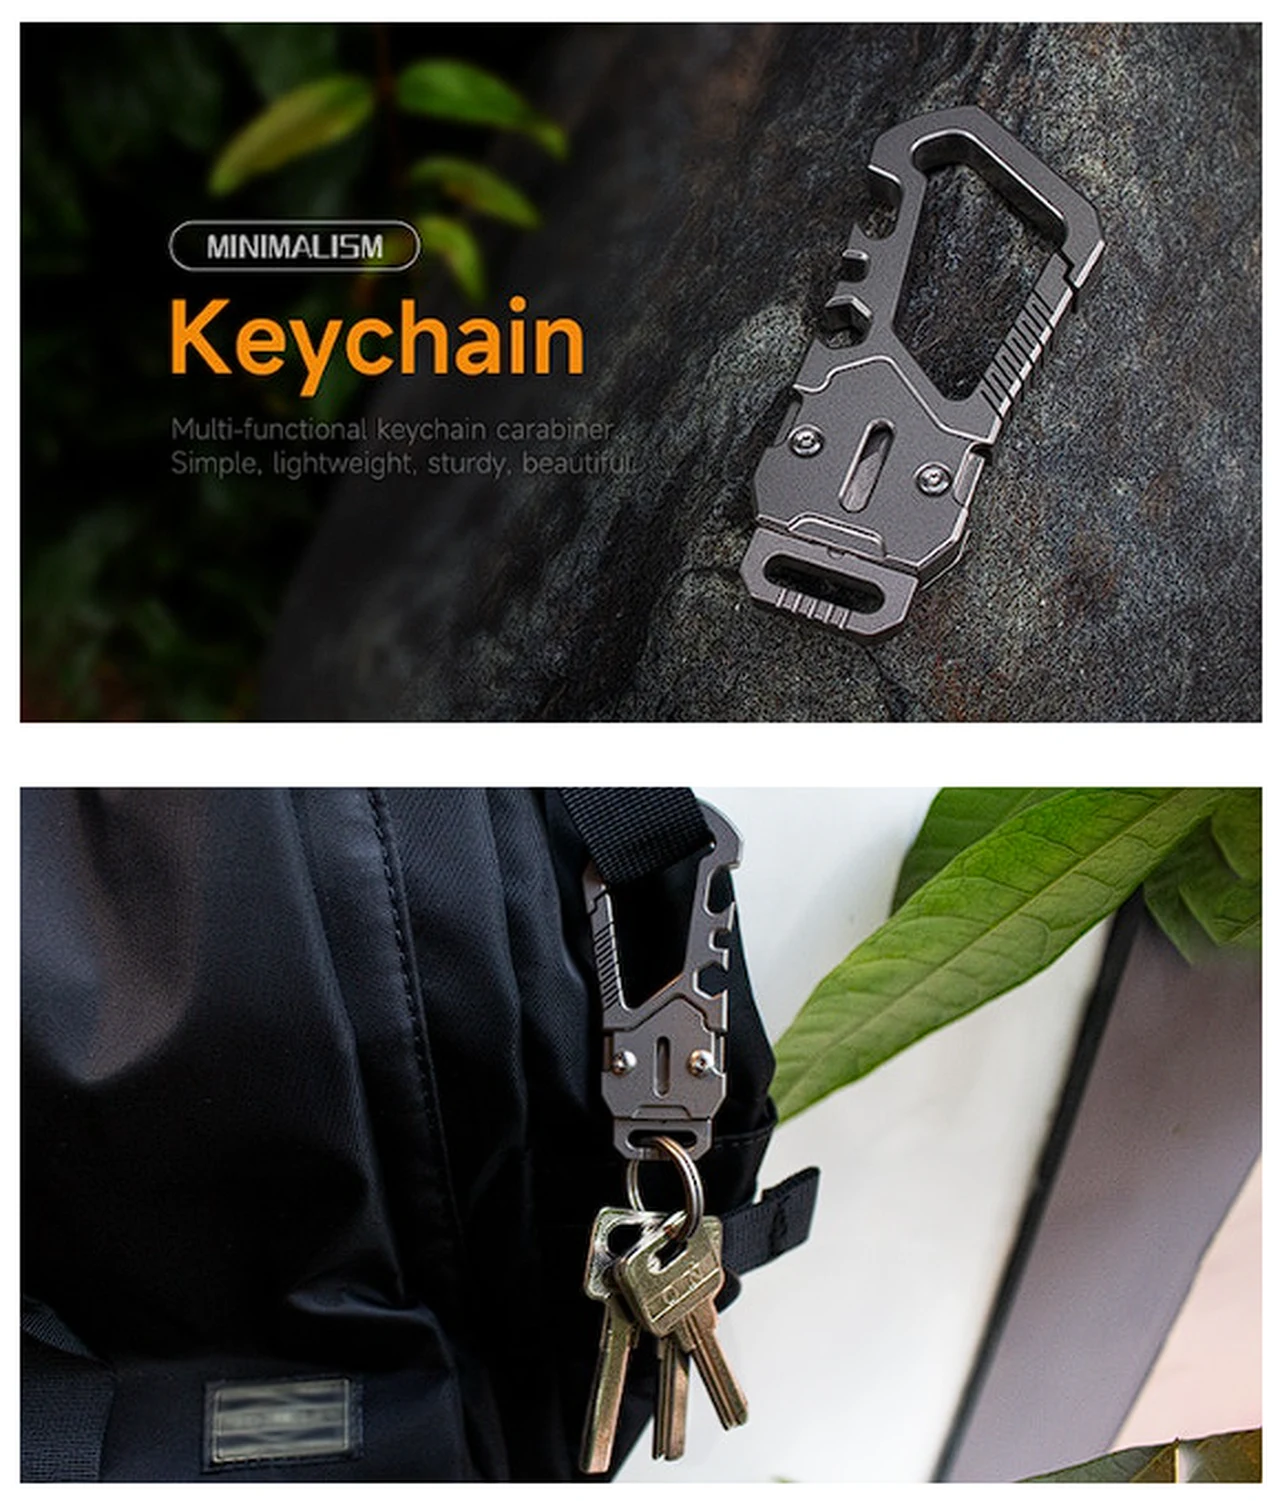 KeySnap keychain EDC multitool Kickstarter